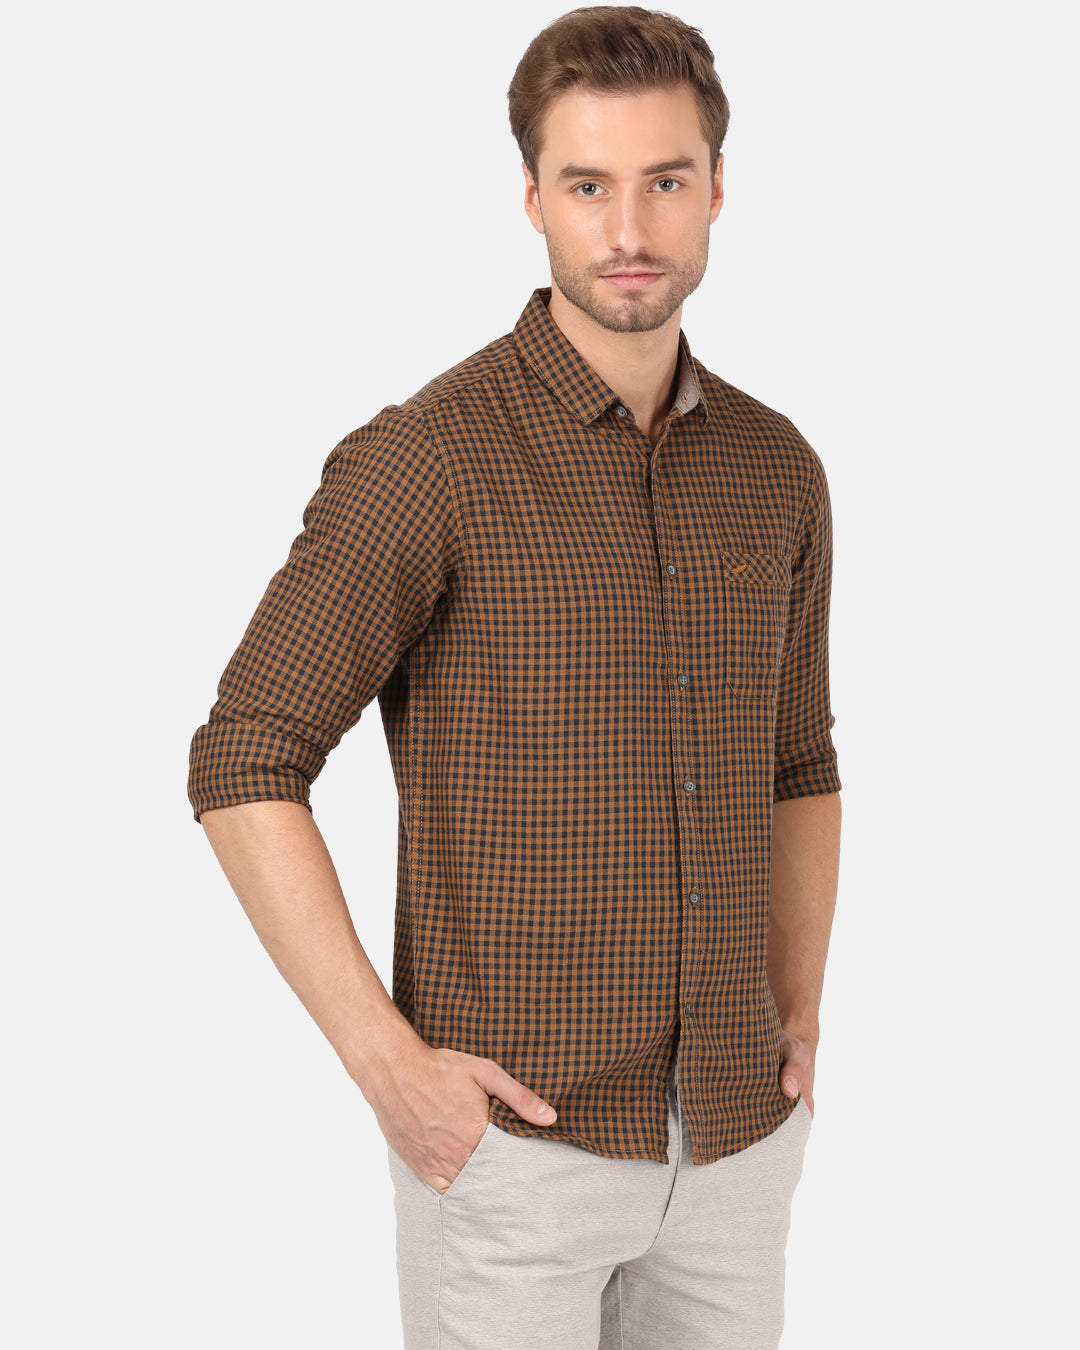 Crocodile Men's Casual Full Sleeve Comfort Fit Checks Dark Brown with Collar Shirt